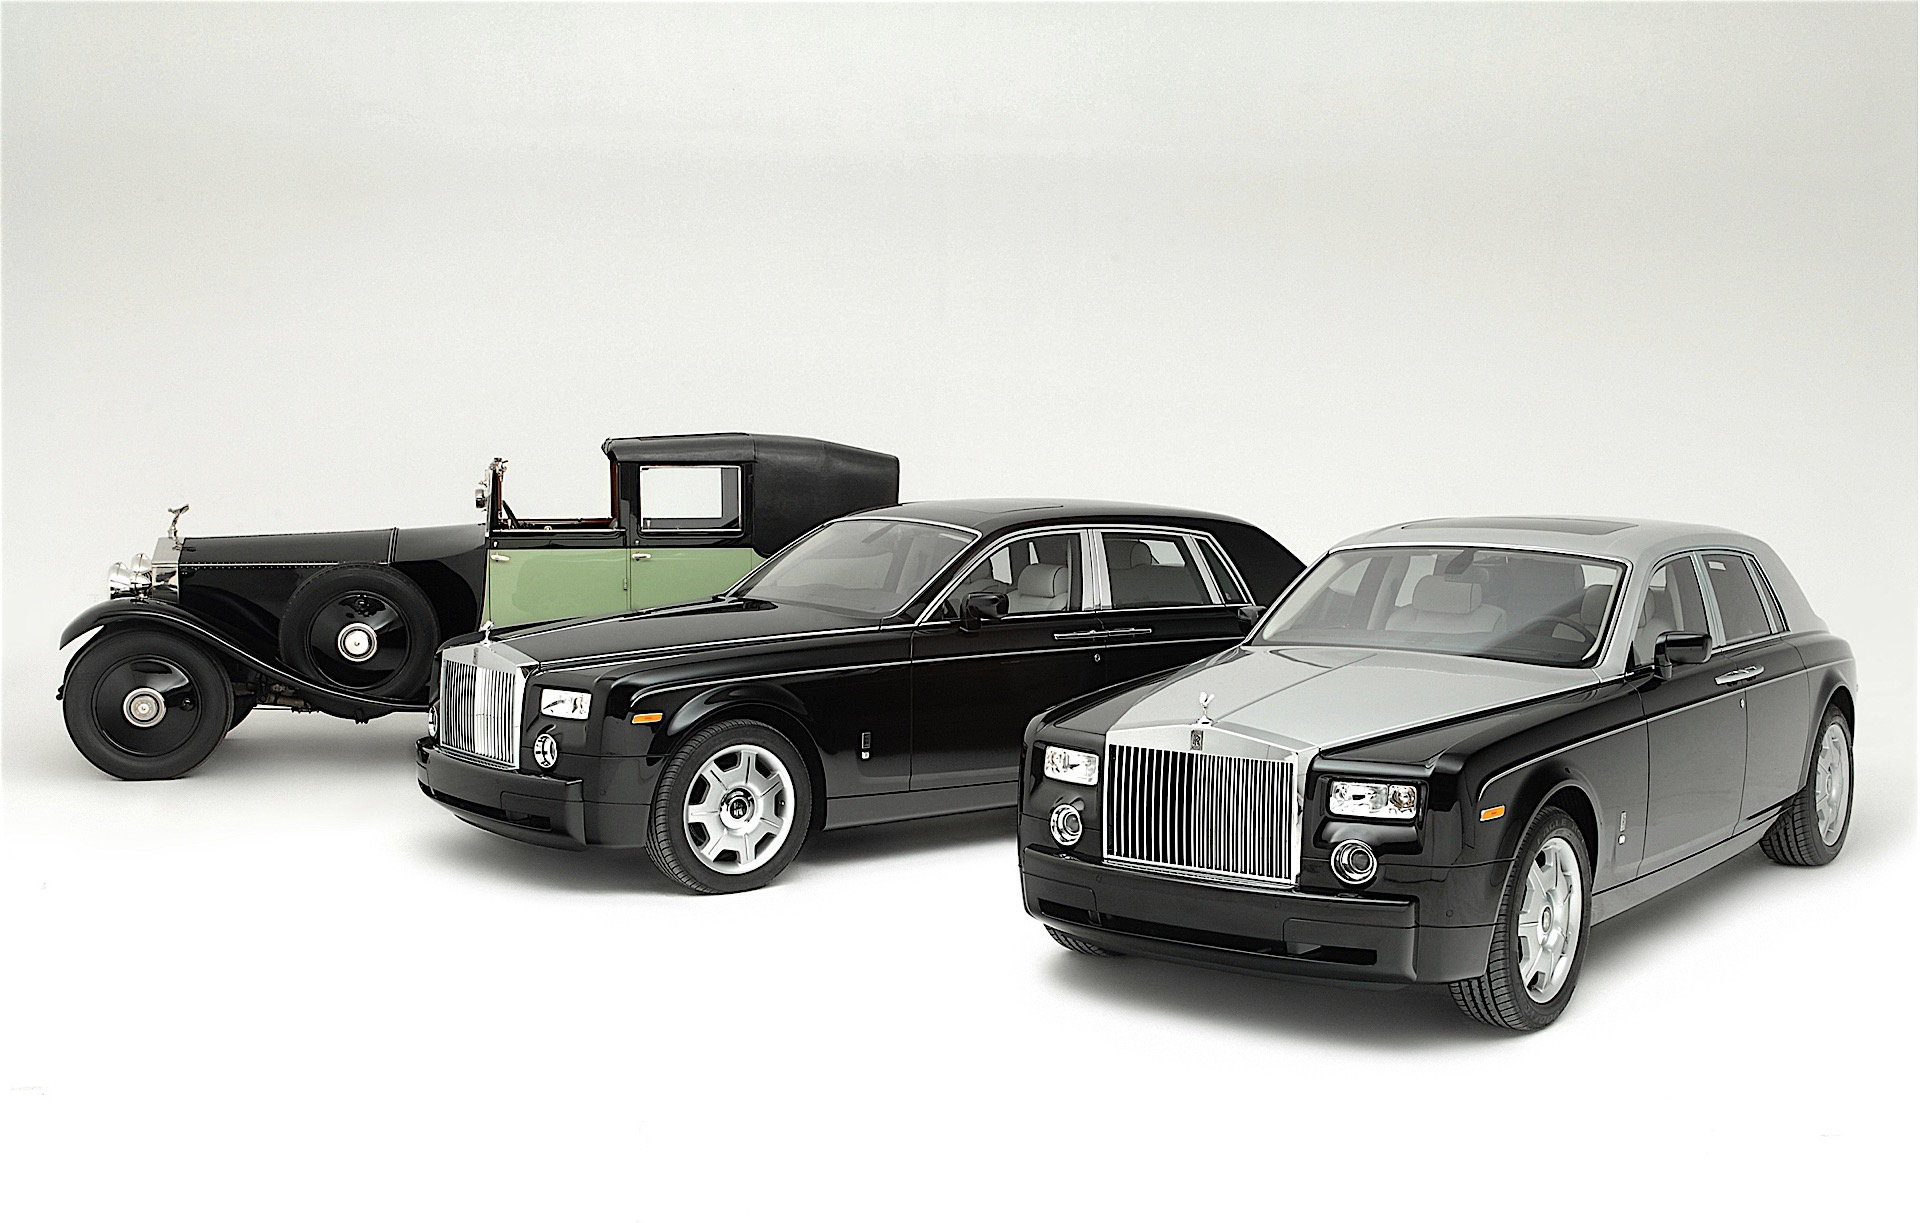 Rolls-Royce history